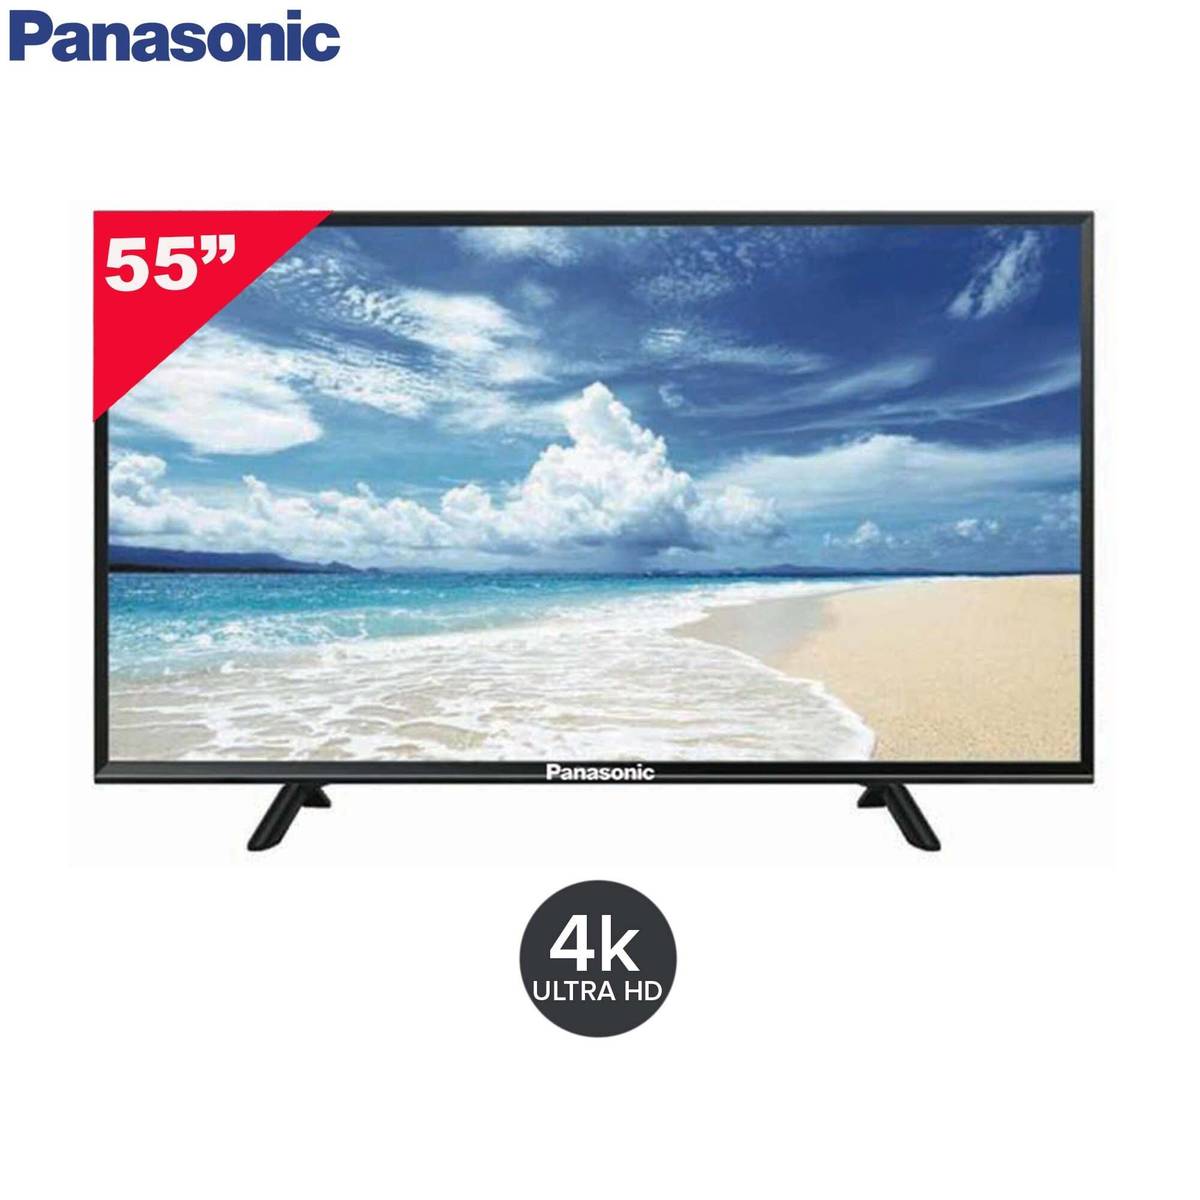 Panasonic 55'' TH-55FX700N  4K UHD HDR LED TV